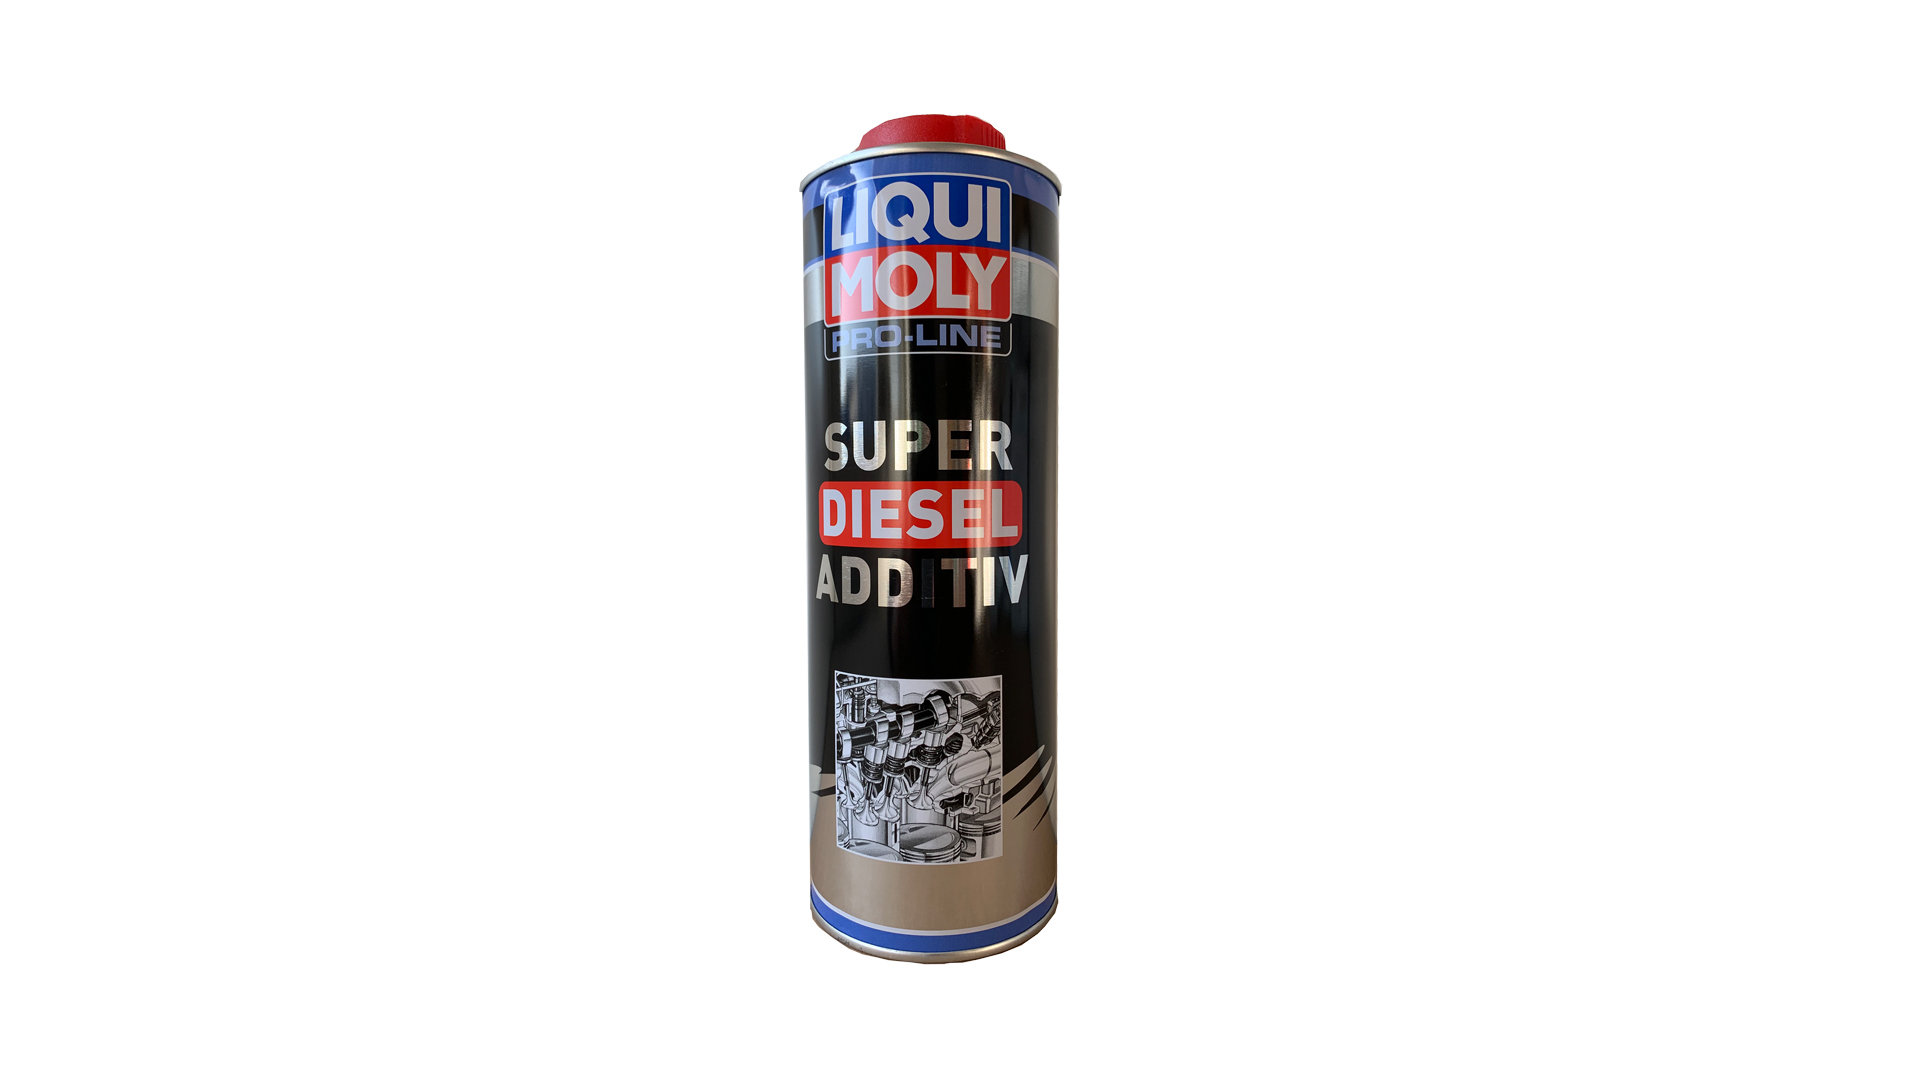 Liqui Moly Pro Line Super Diesel Additiv 1 Liter